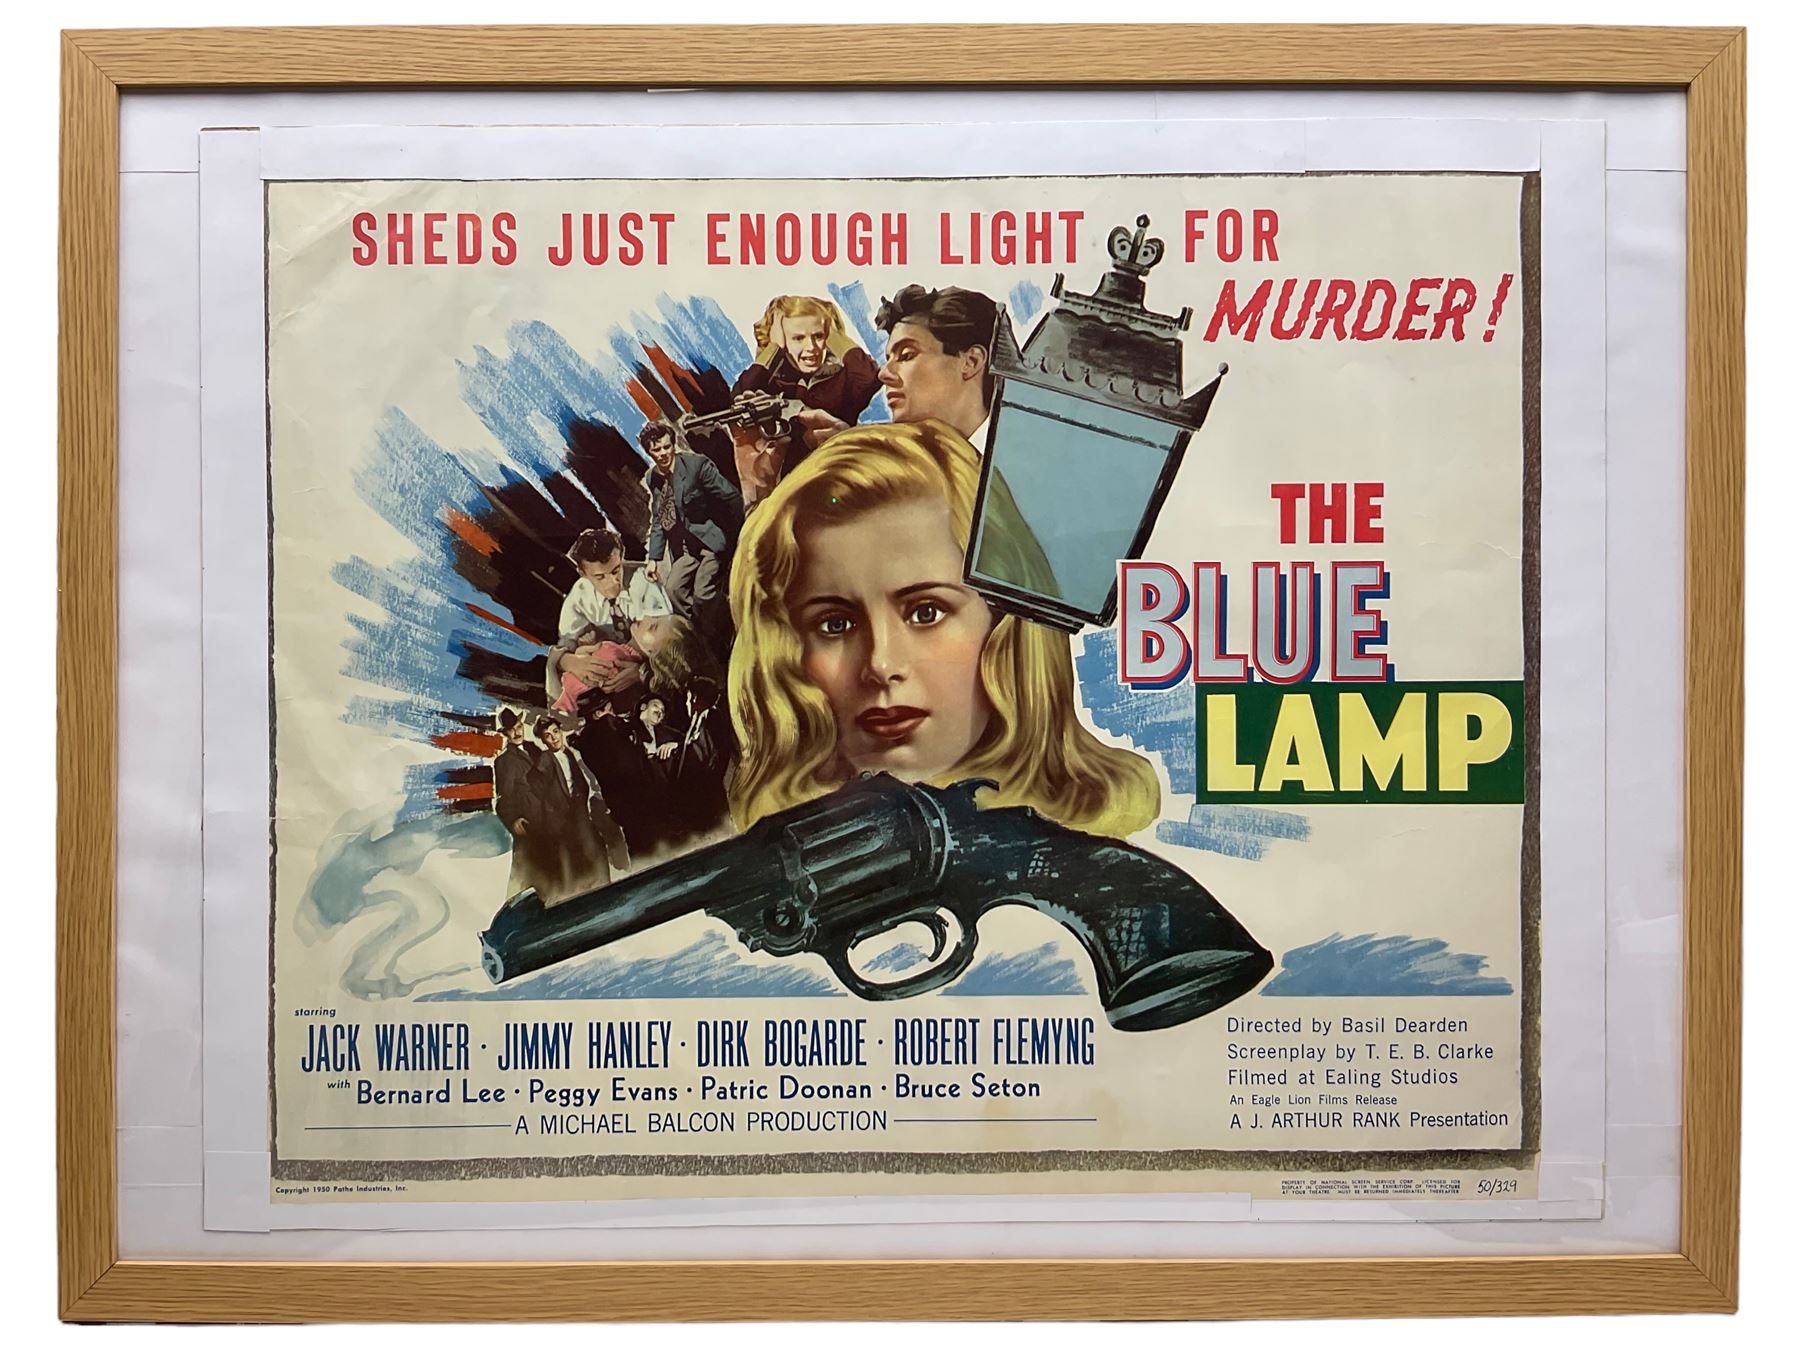 Original Vintage Film Poster - The Blue Lamp (1950) National Screen Service film poster starring Dir - Image 2 of 2